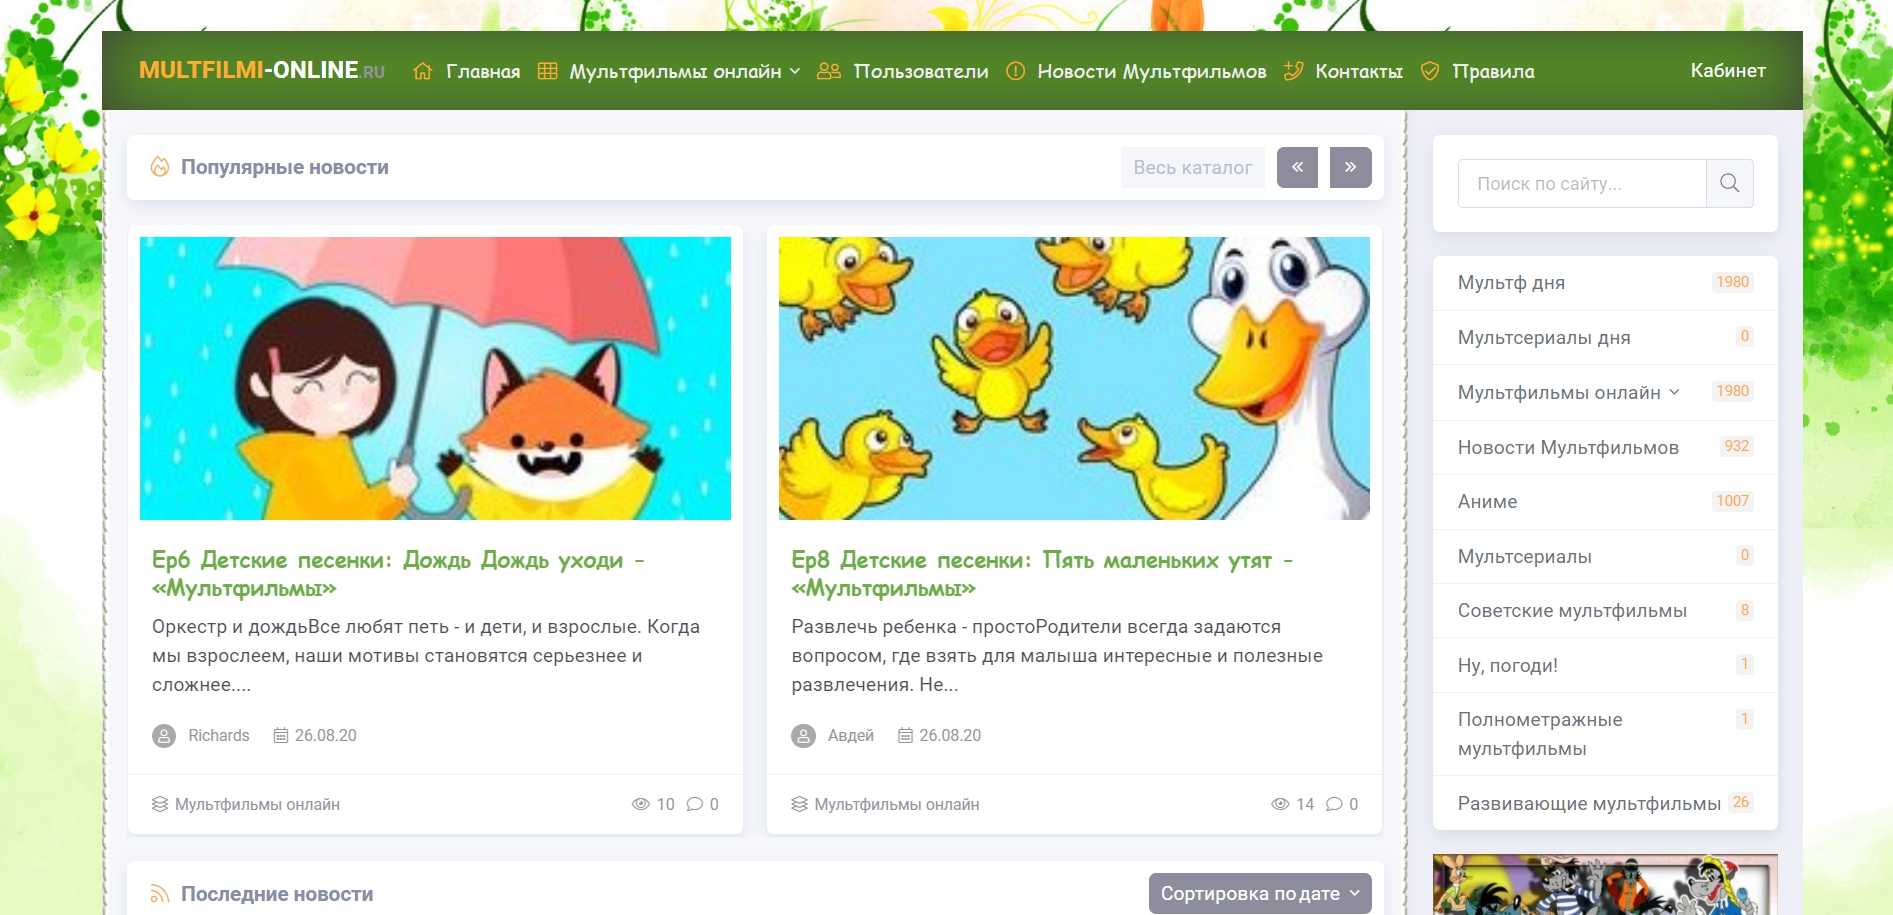 multfilmi-online.ru - ћультфильмы онлайн